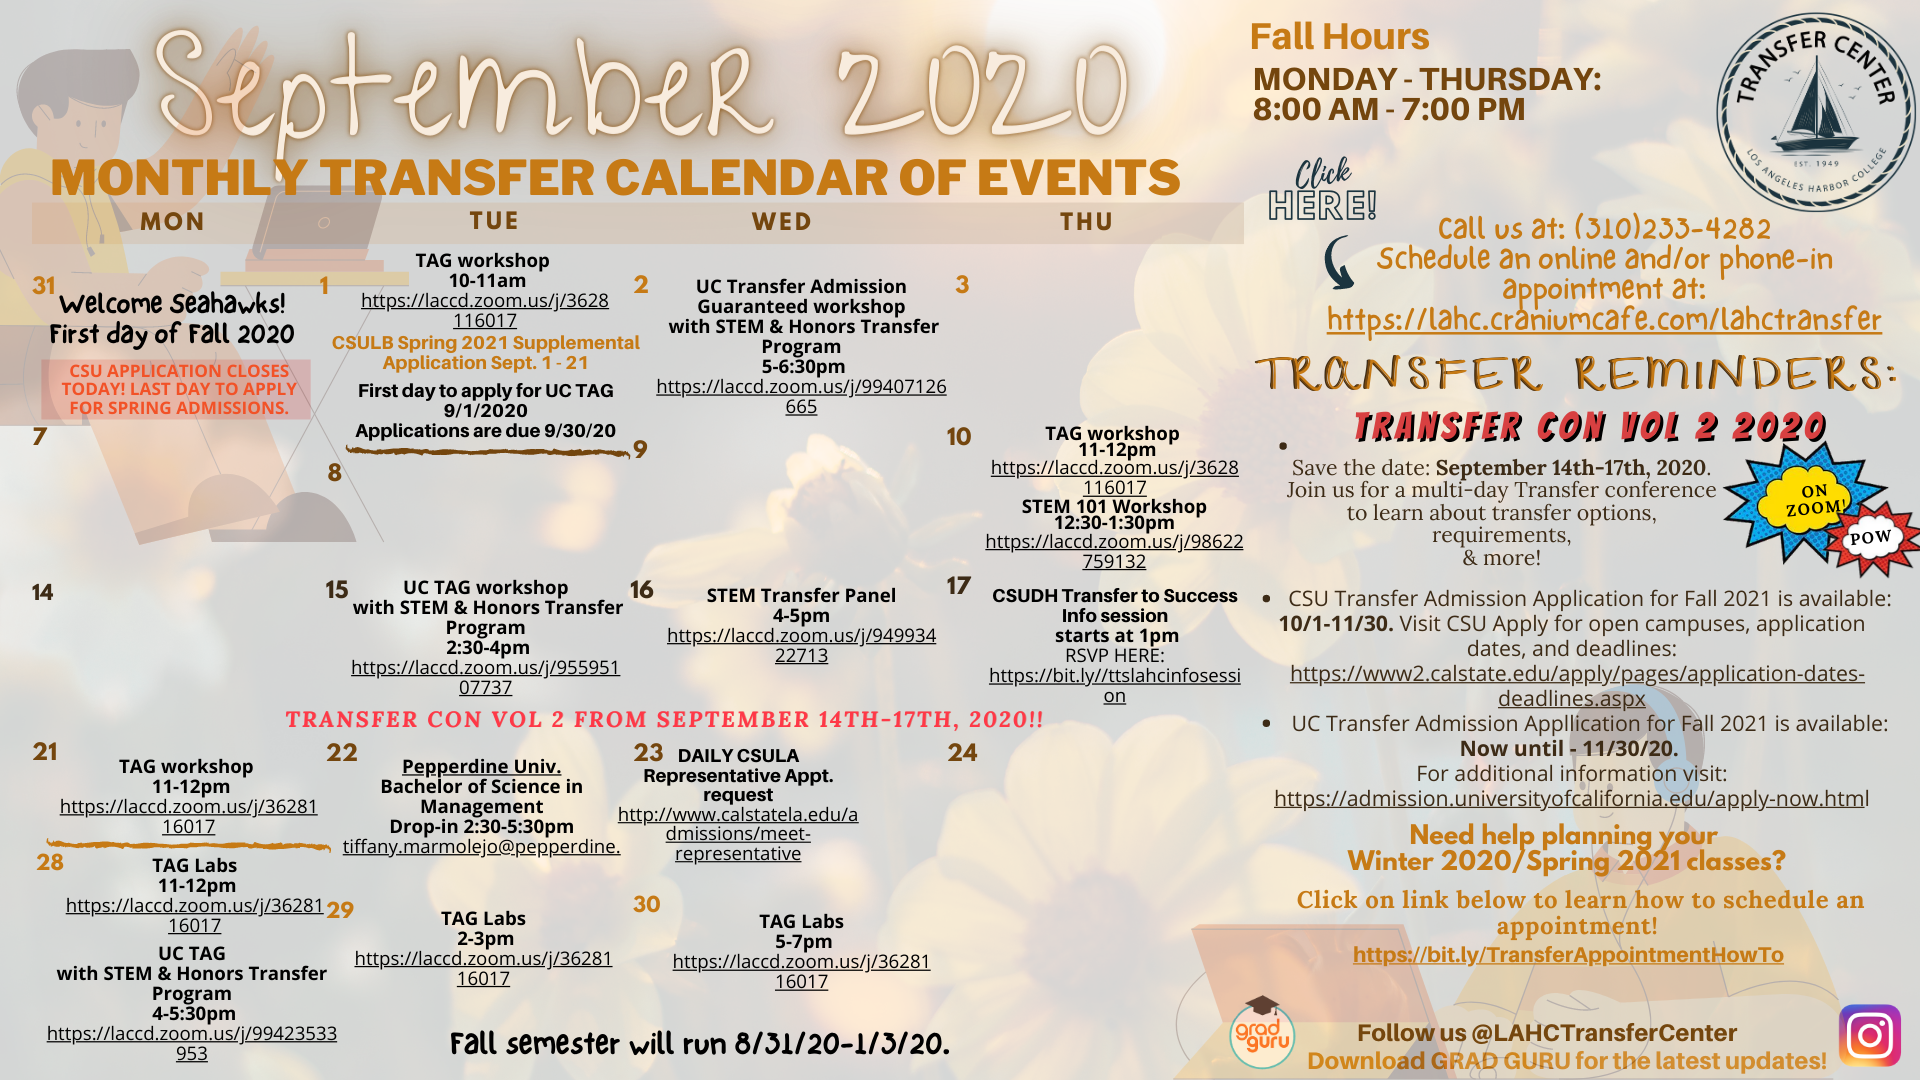 September Events Calendar